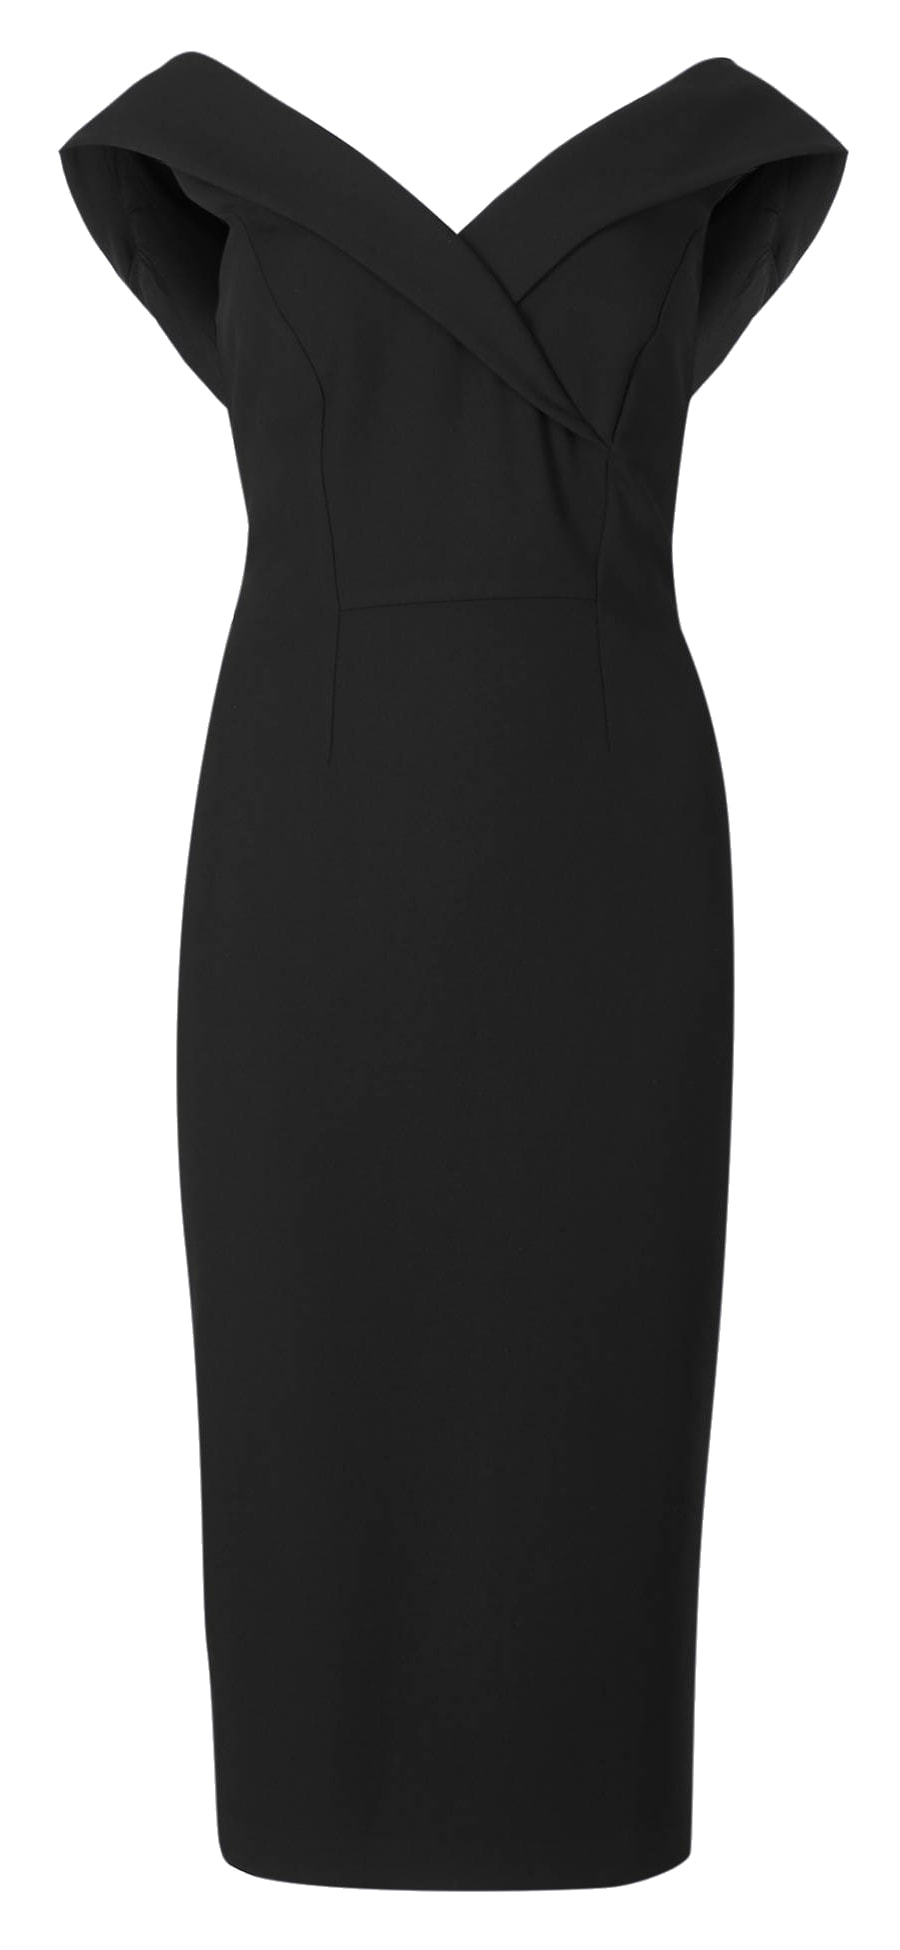 M&S Collection Black Double Crepe Bodycon Dress